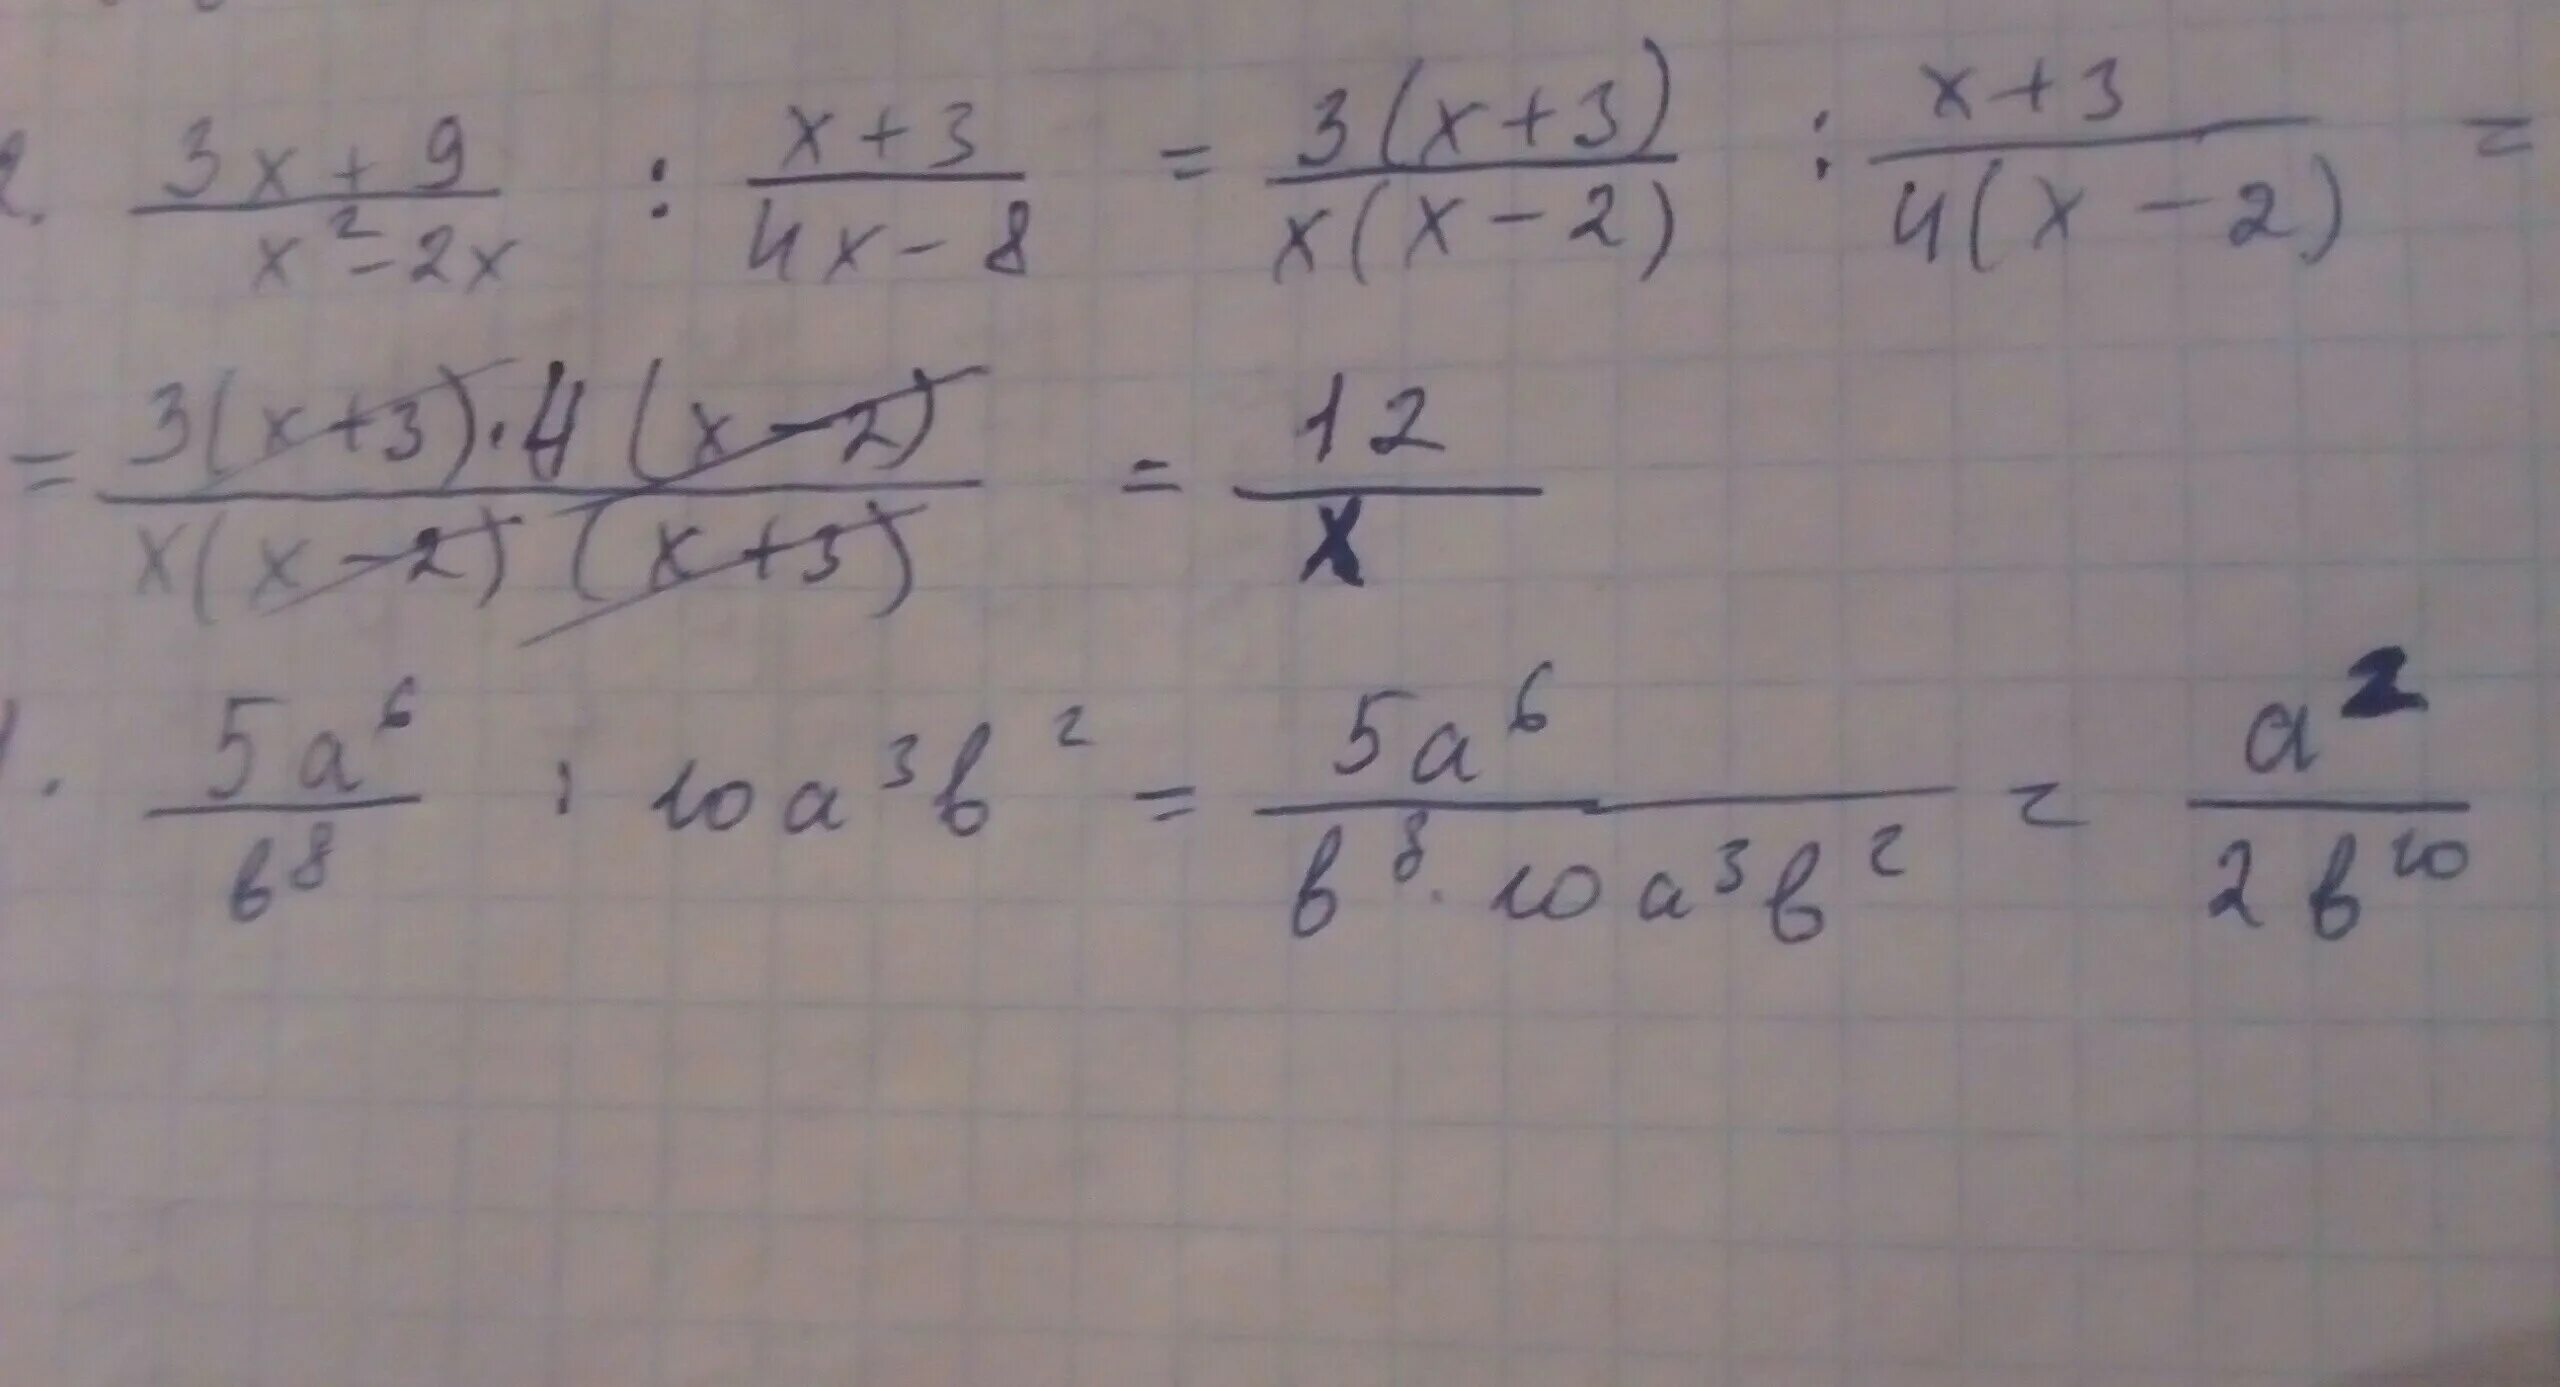 (Х-3)(Х+3). 3/Х+2-5/Х-3 -9/2. Х+1/3=5/6. Упростите выражения -9(3x-1/9)+(x+4/9). 1 15 0.5